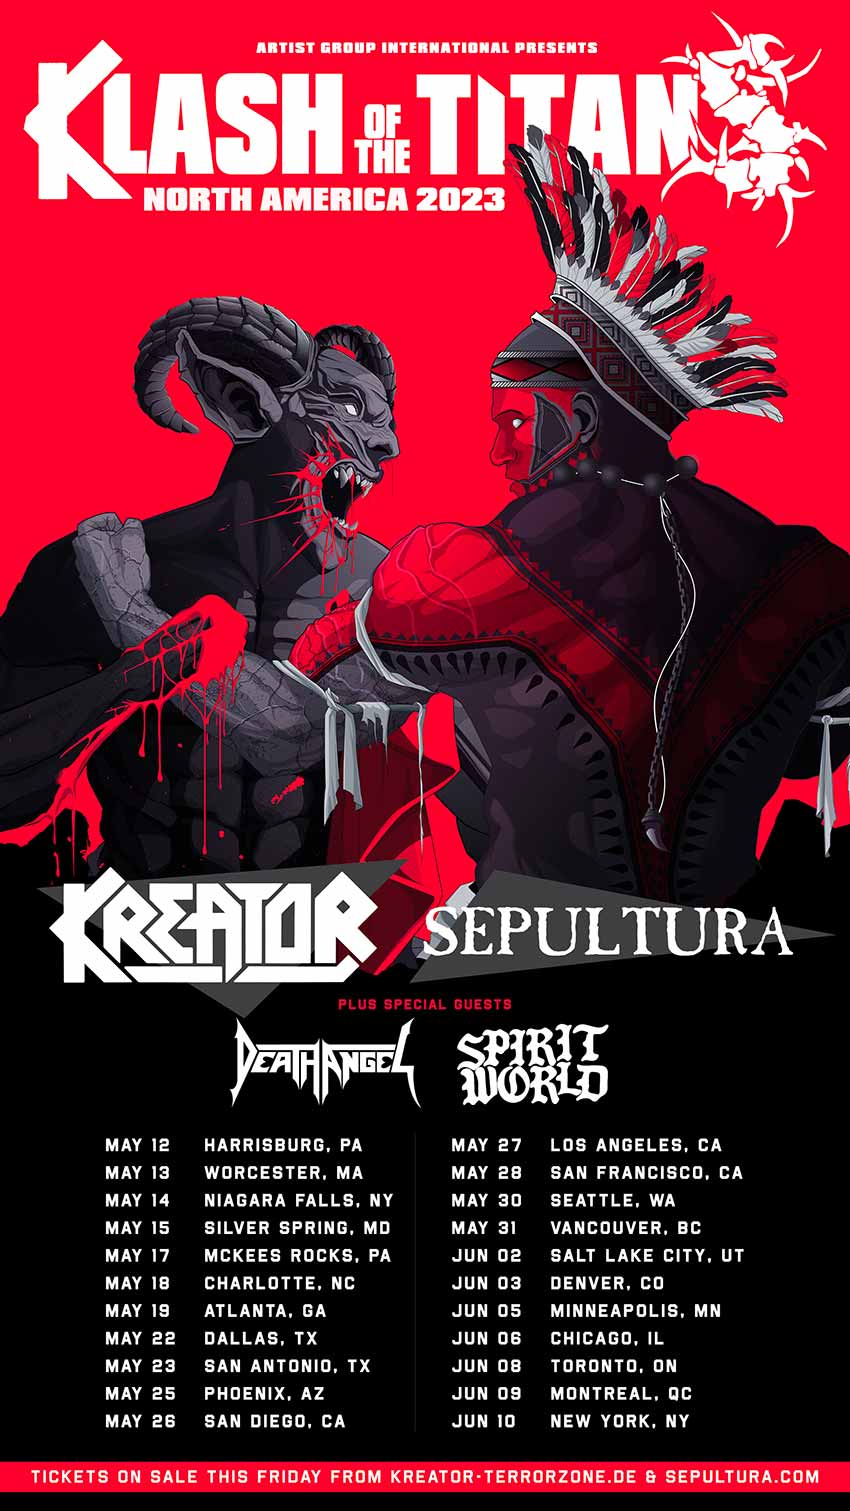 Kreator Sepultura tour dates 2023